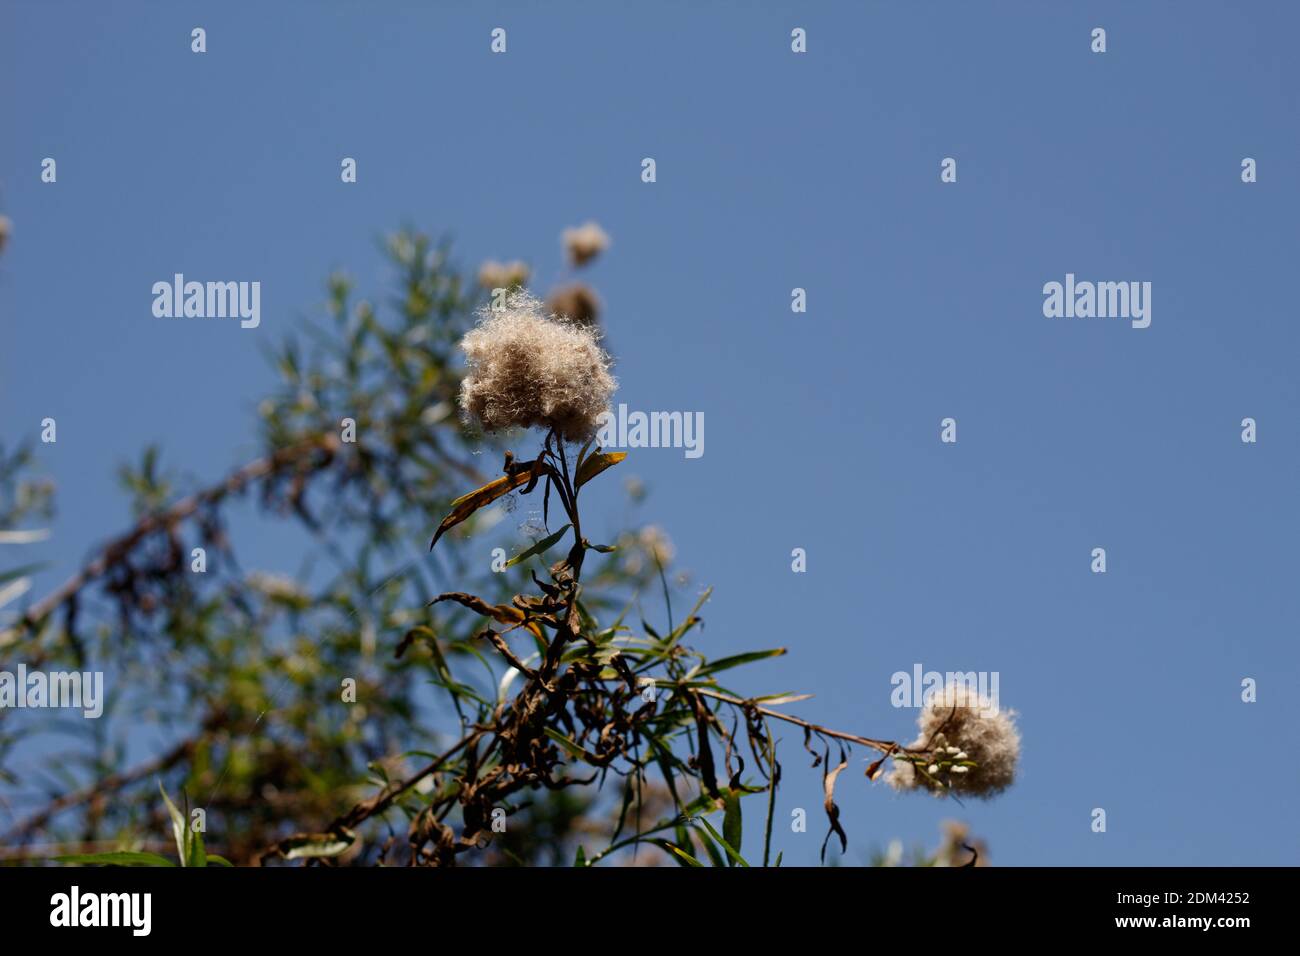 White achene fruit, Seepwillow, Baccharis Salicifolia, Asteraceae, native, shrub, Ballona Freshwater Marsh, Southern California Coast, Summer. Stock Photo